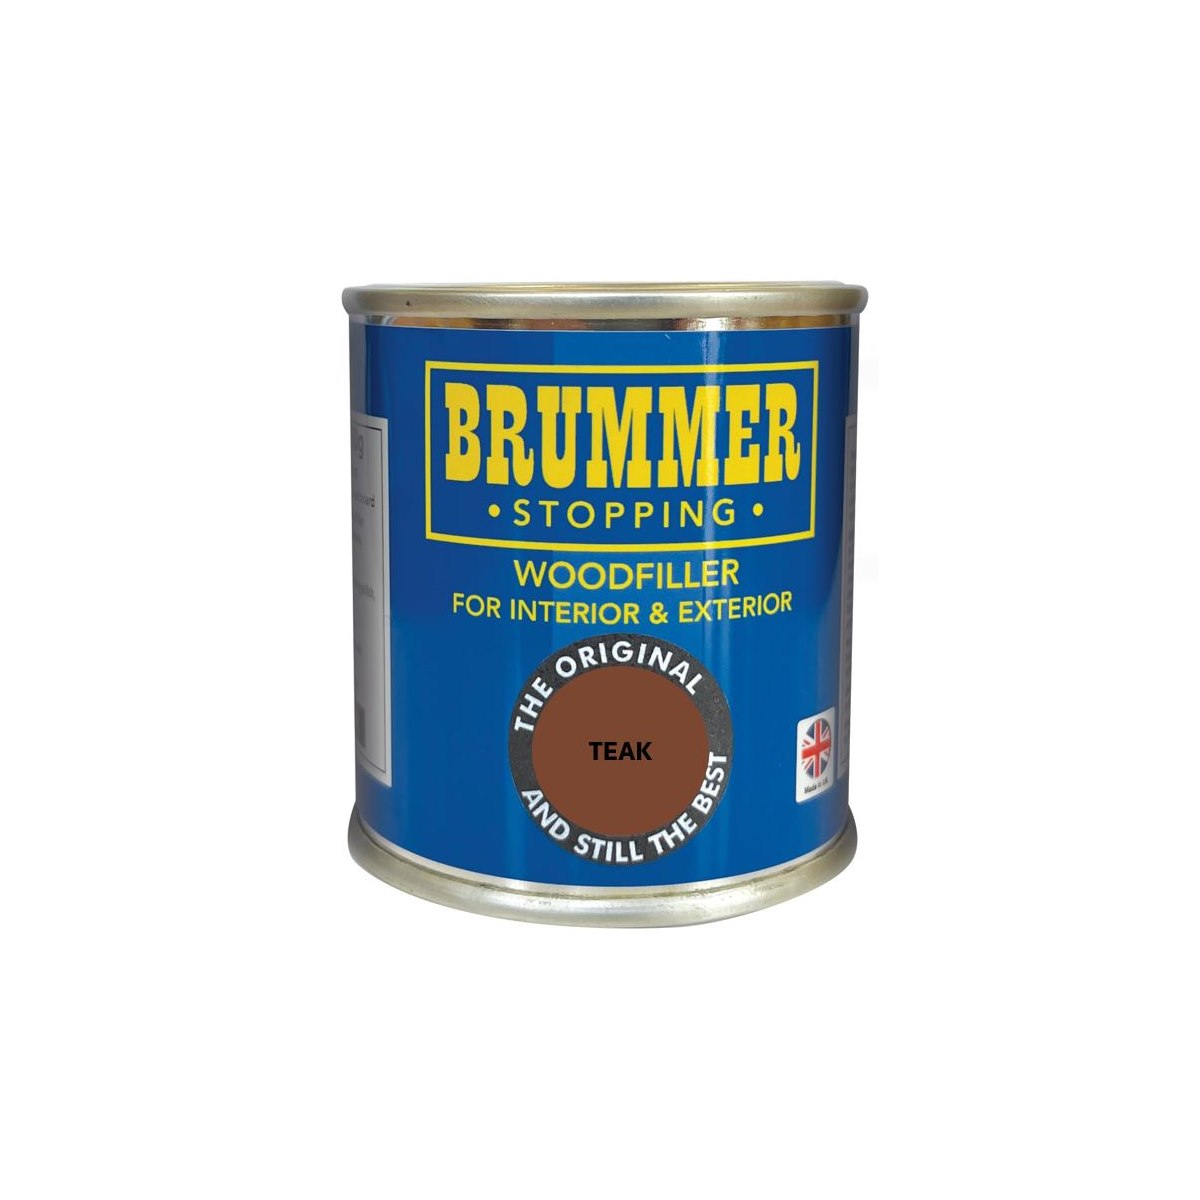 Brummer Woodfiller for Interior and Exteior Use Teak 700g